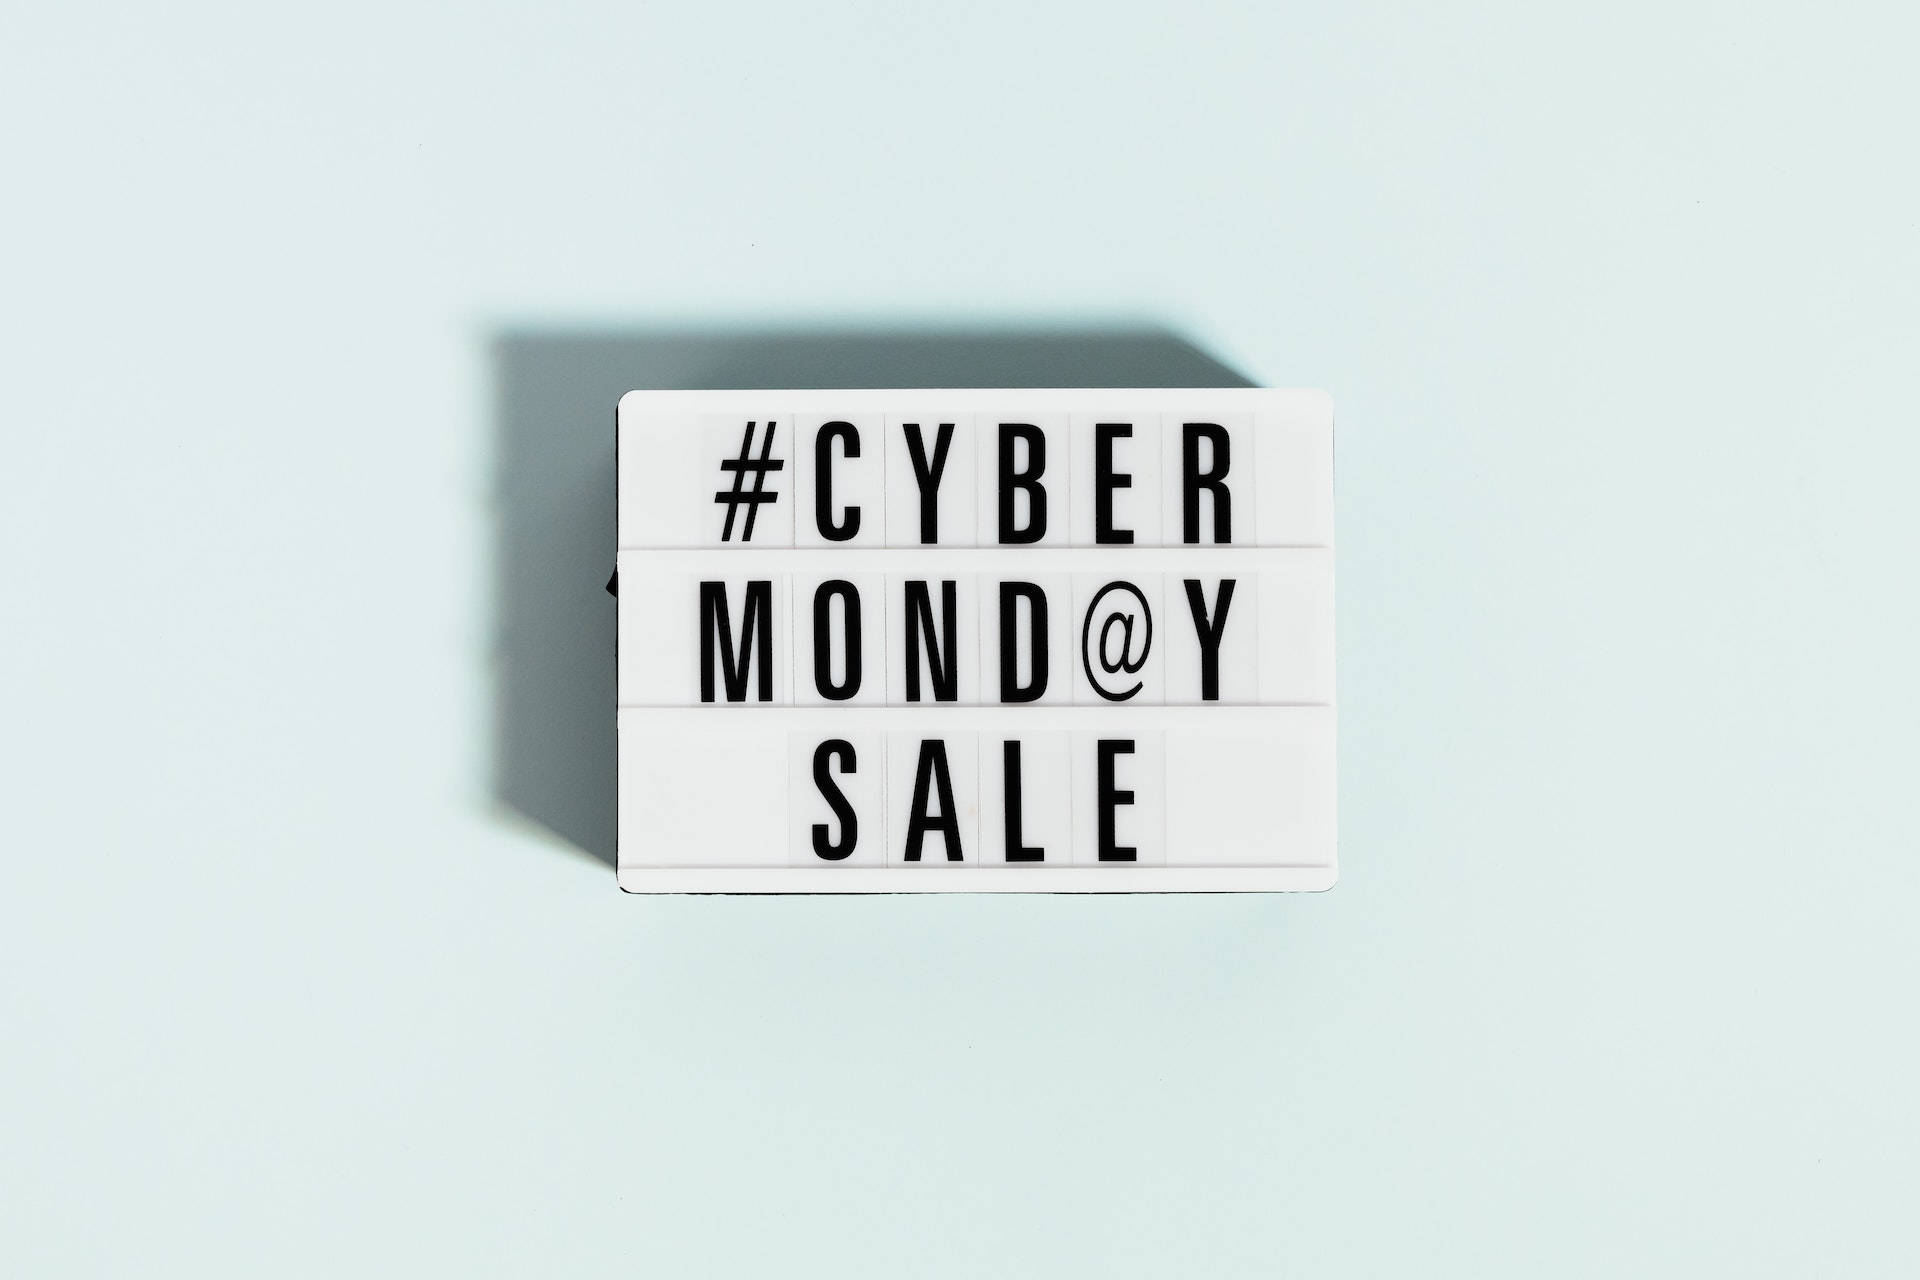 Cyber Monday Sale Signage